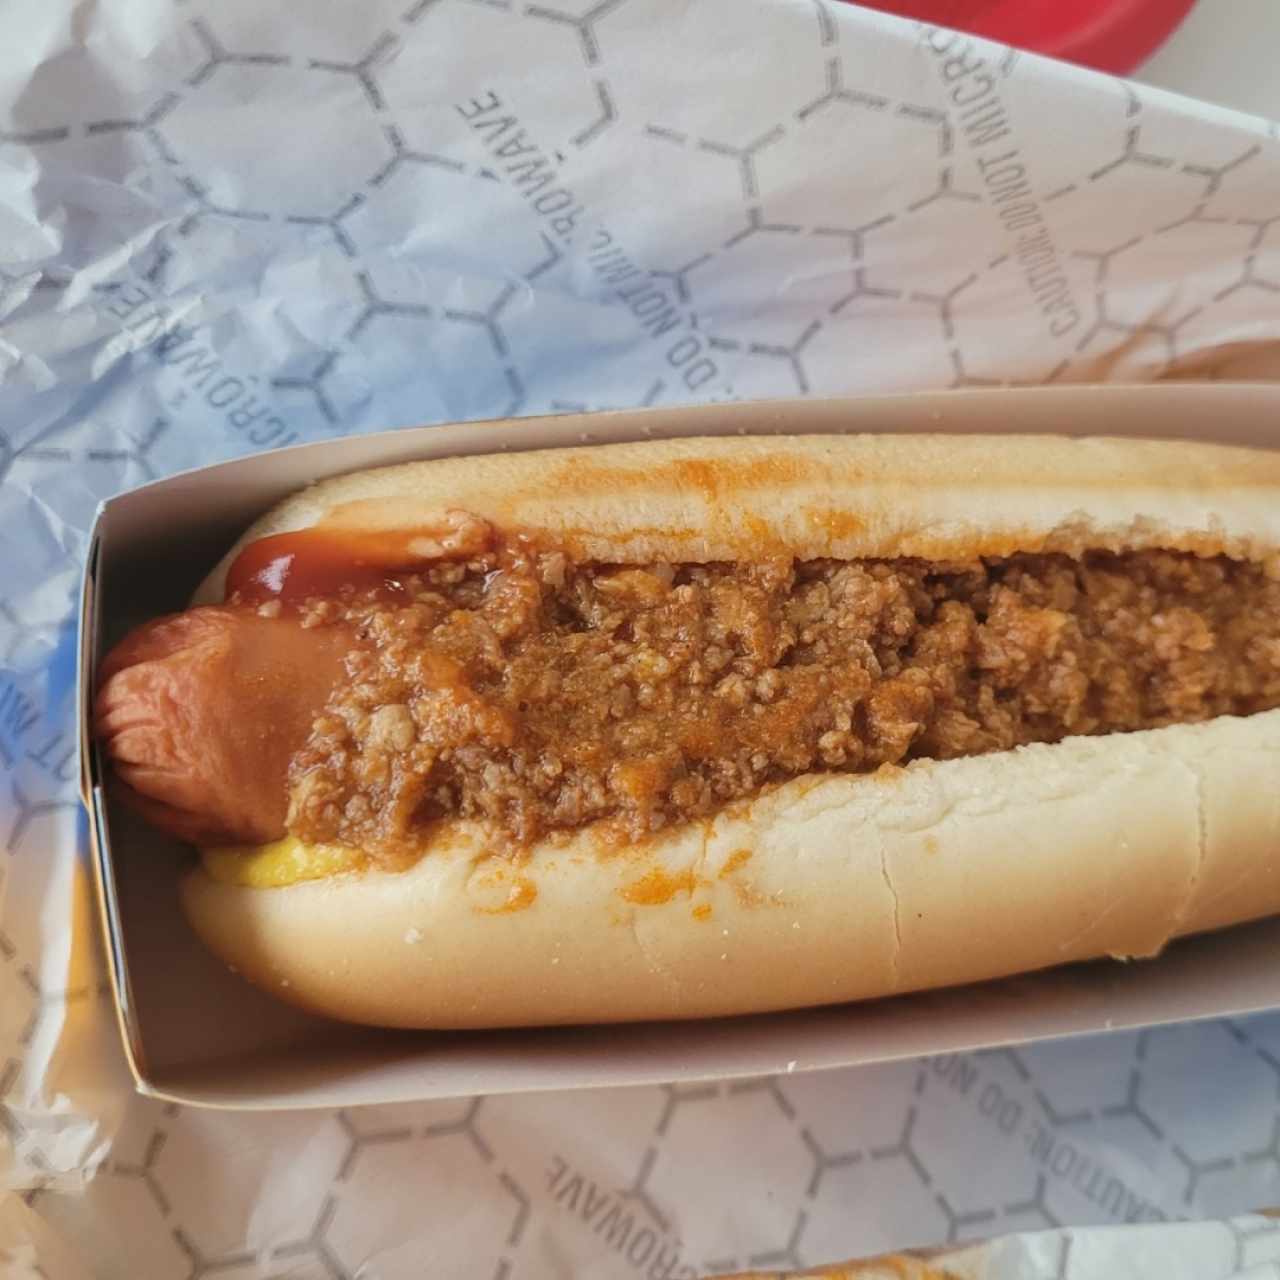 Hot Dog - Chili dog